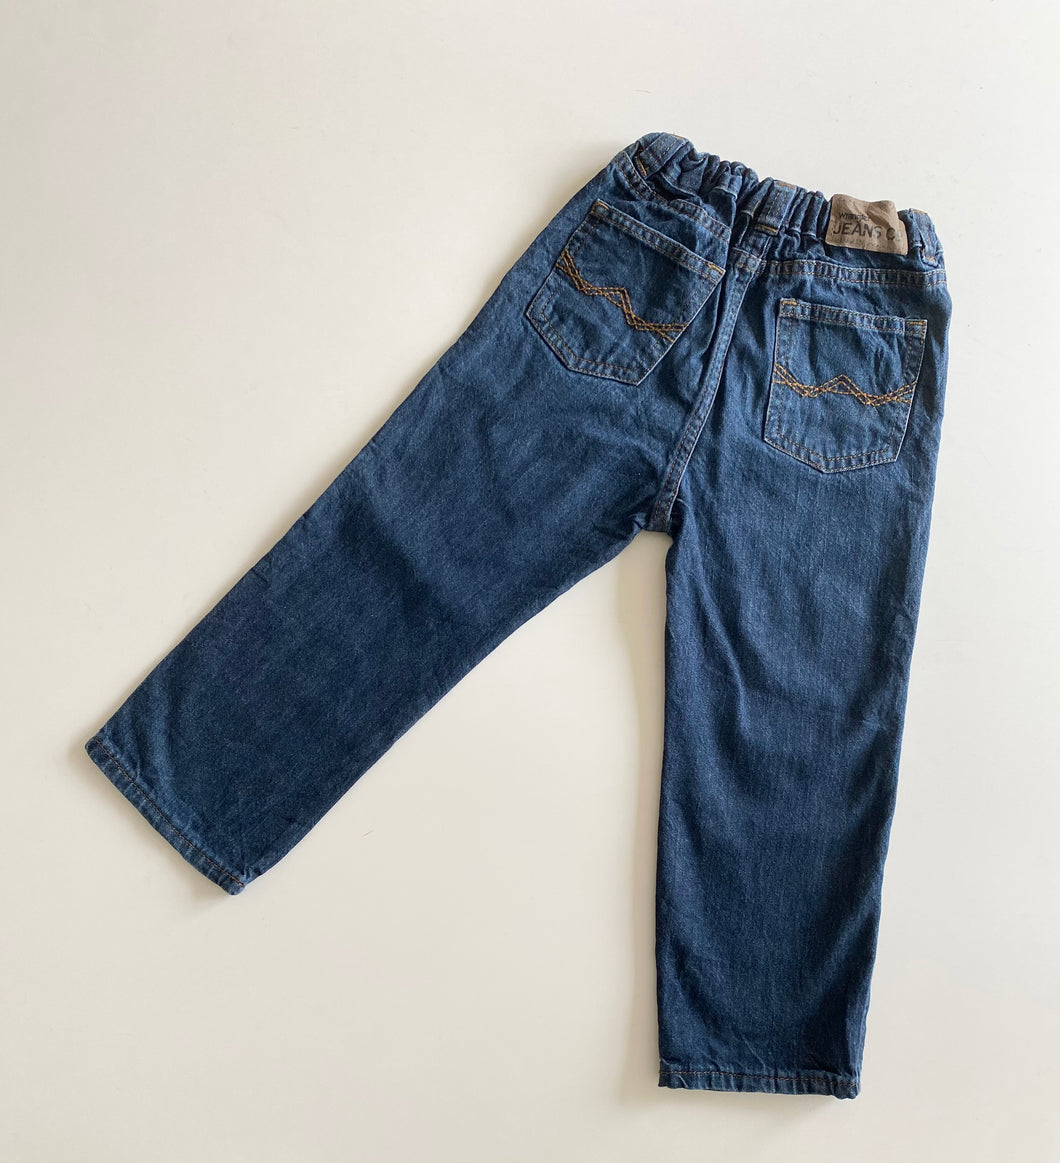 90s Wrangler jeans (Age 5)